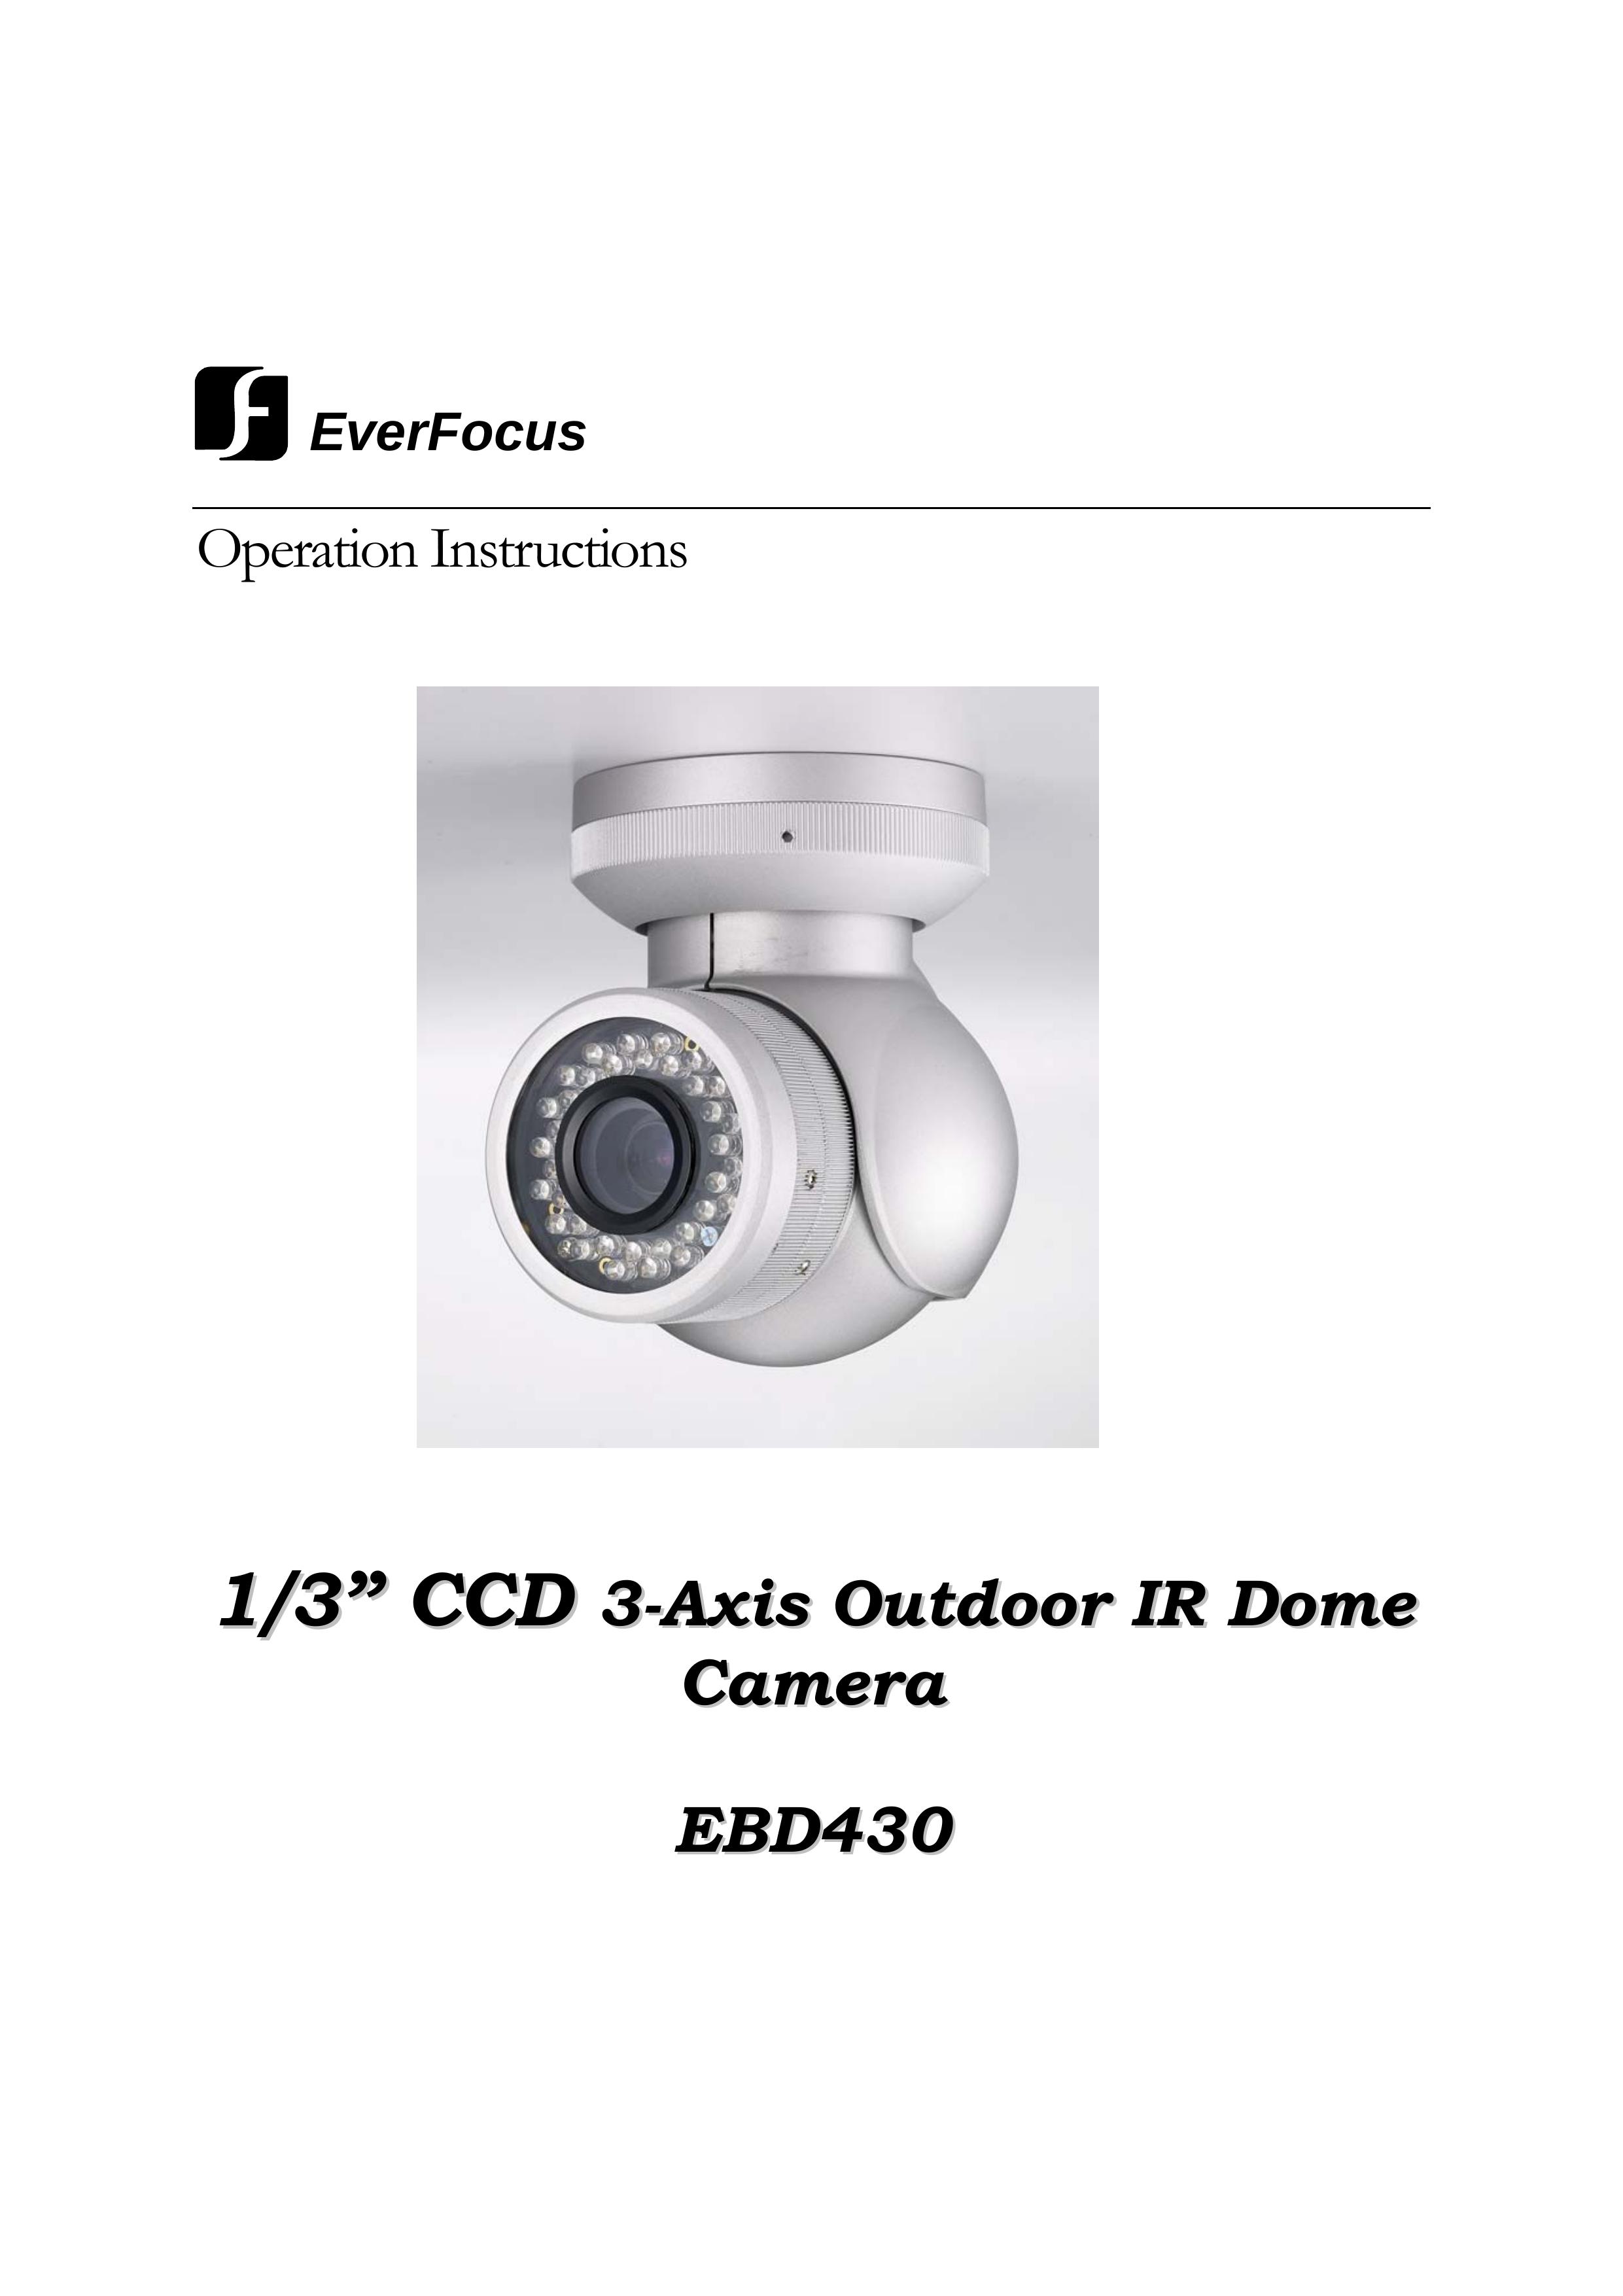 EverFocus EBD430 Security Camera User Manual